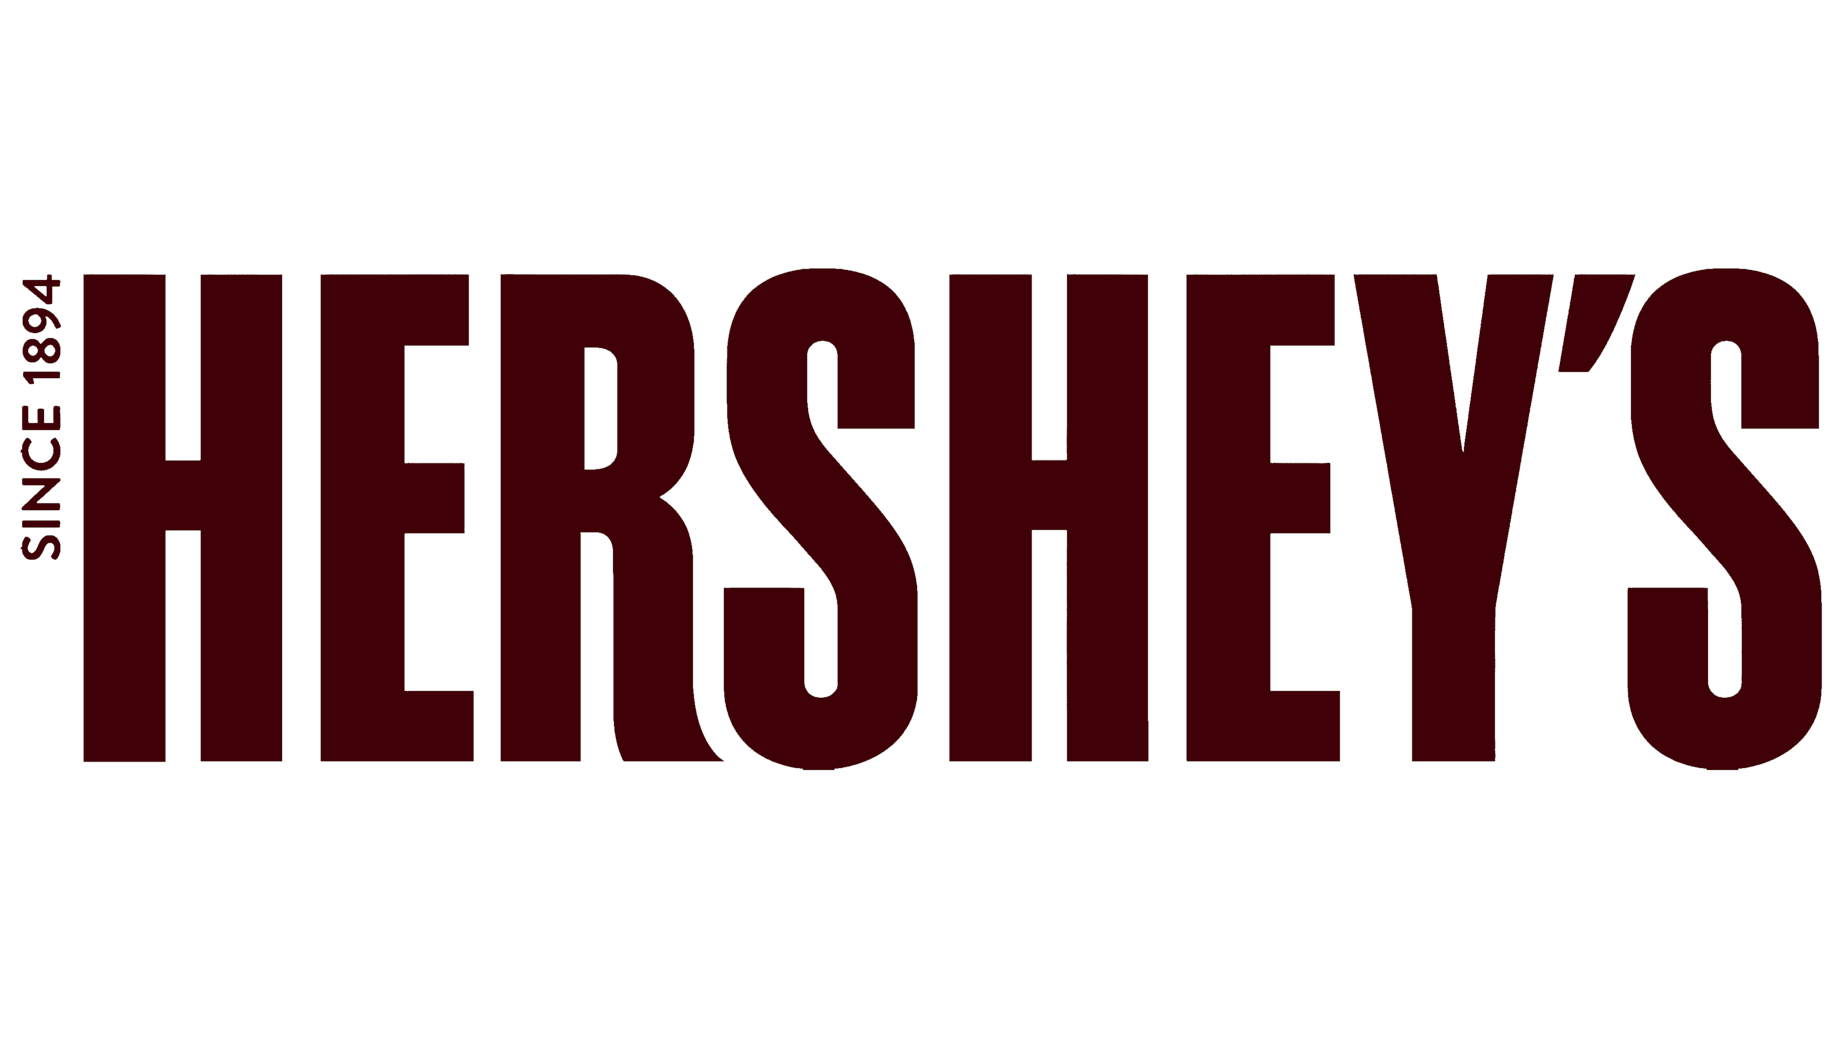 Hersheys sign